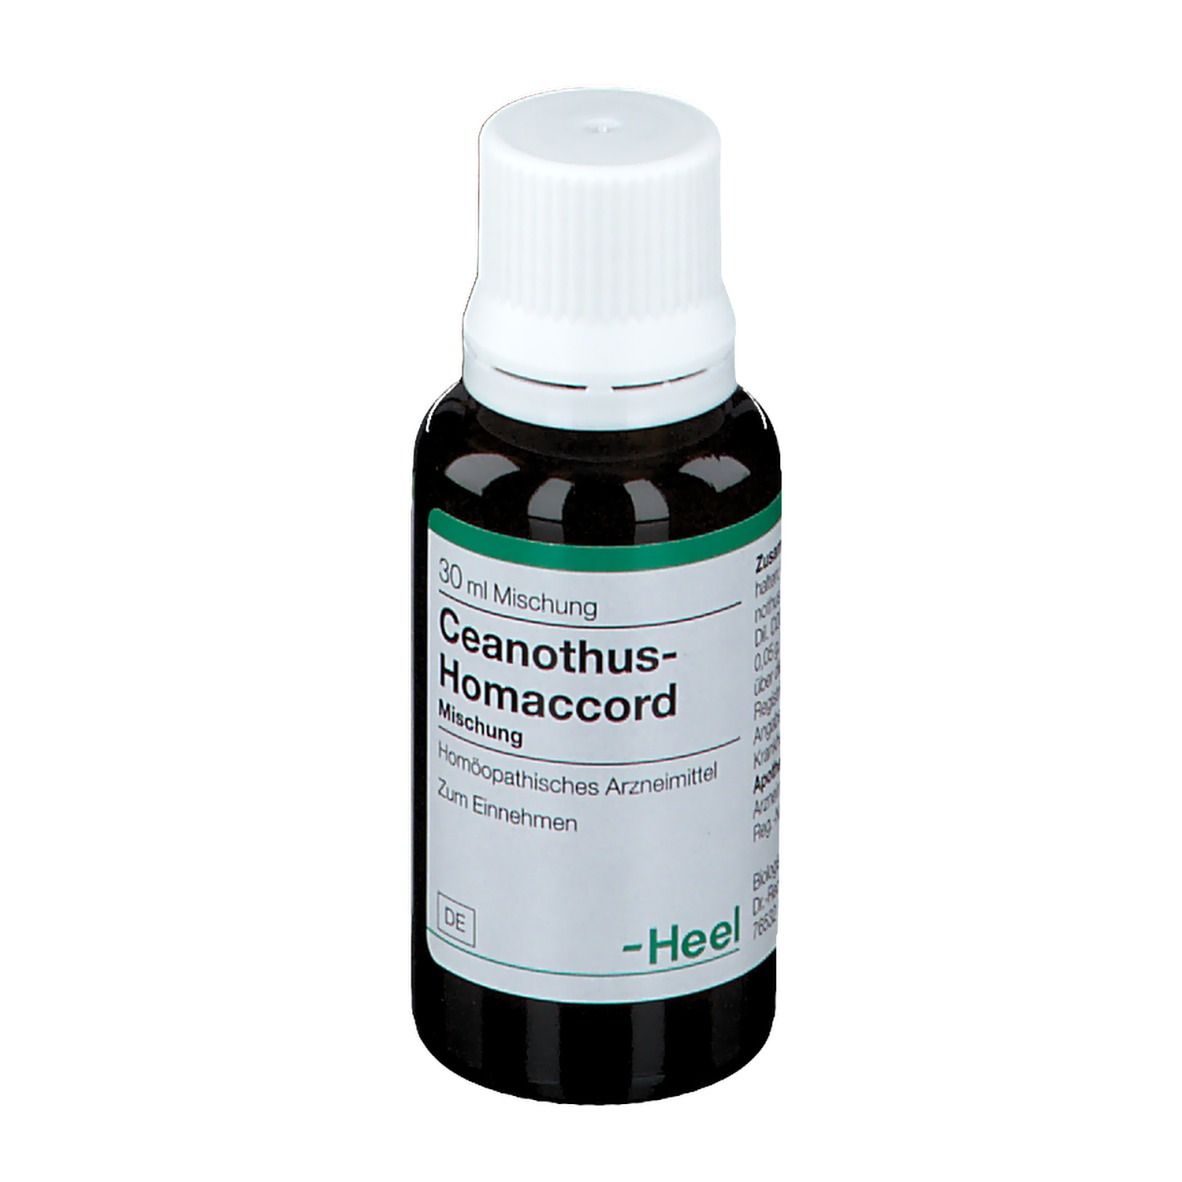 Ceanothus-Homaccord® Mischung